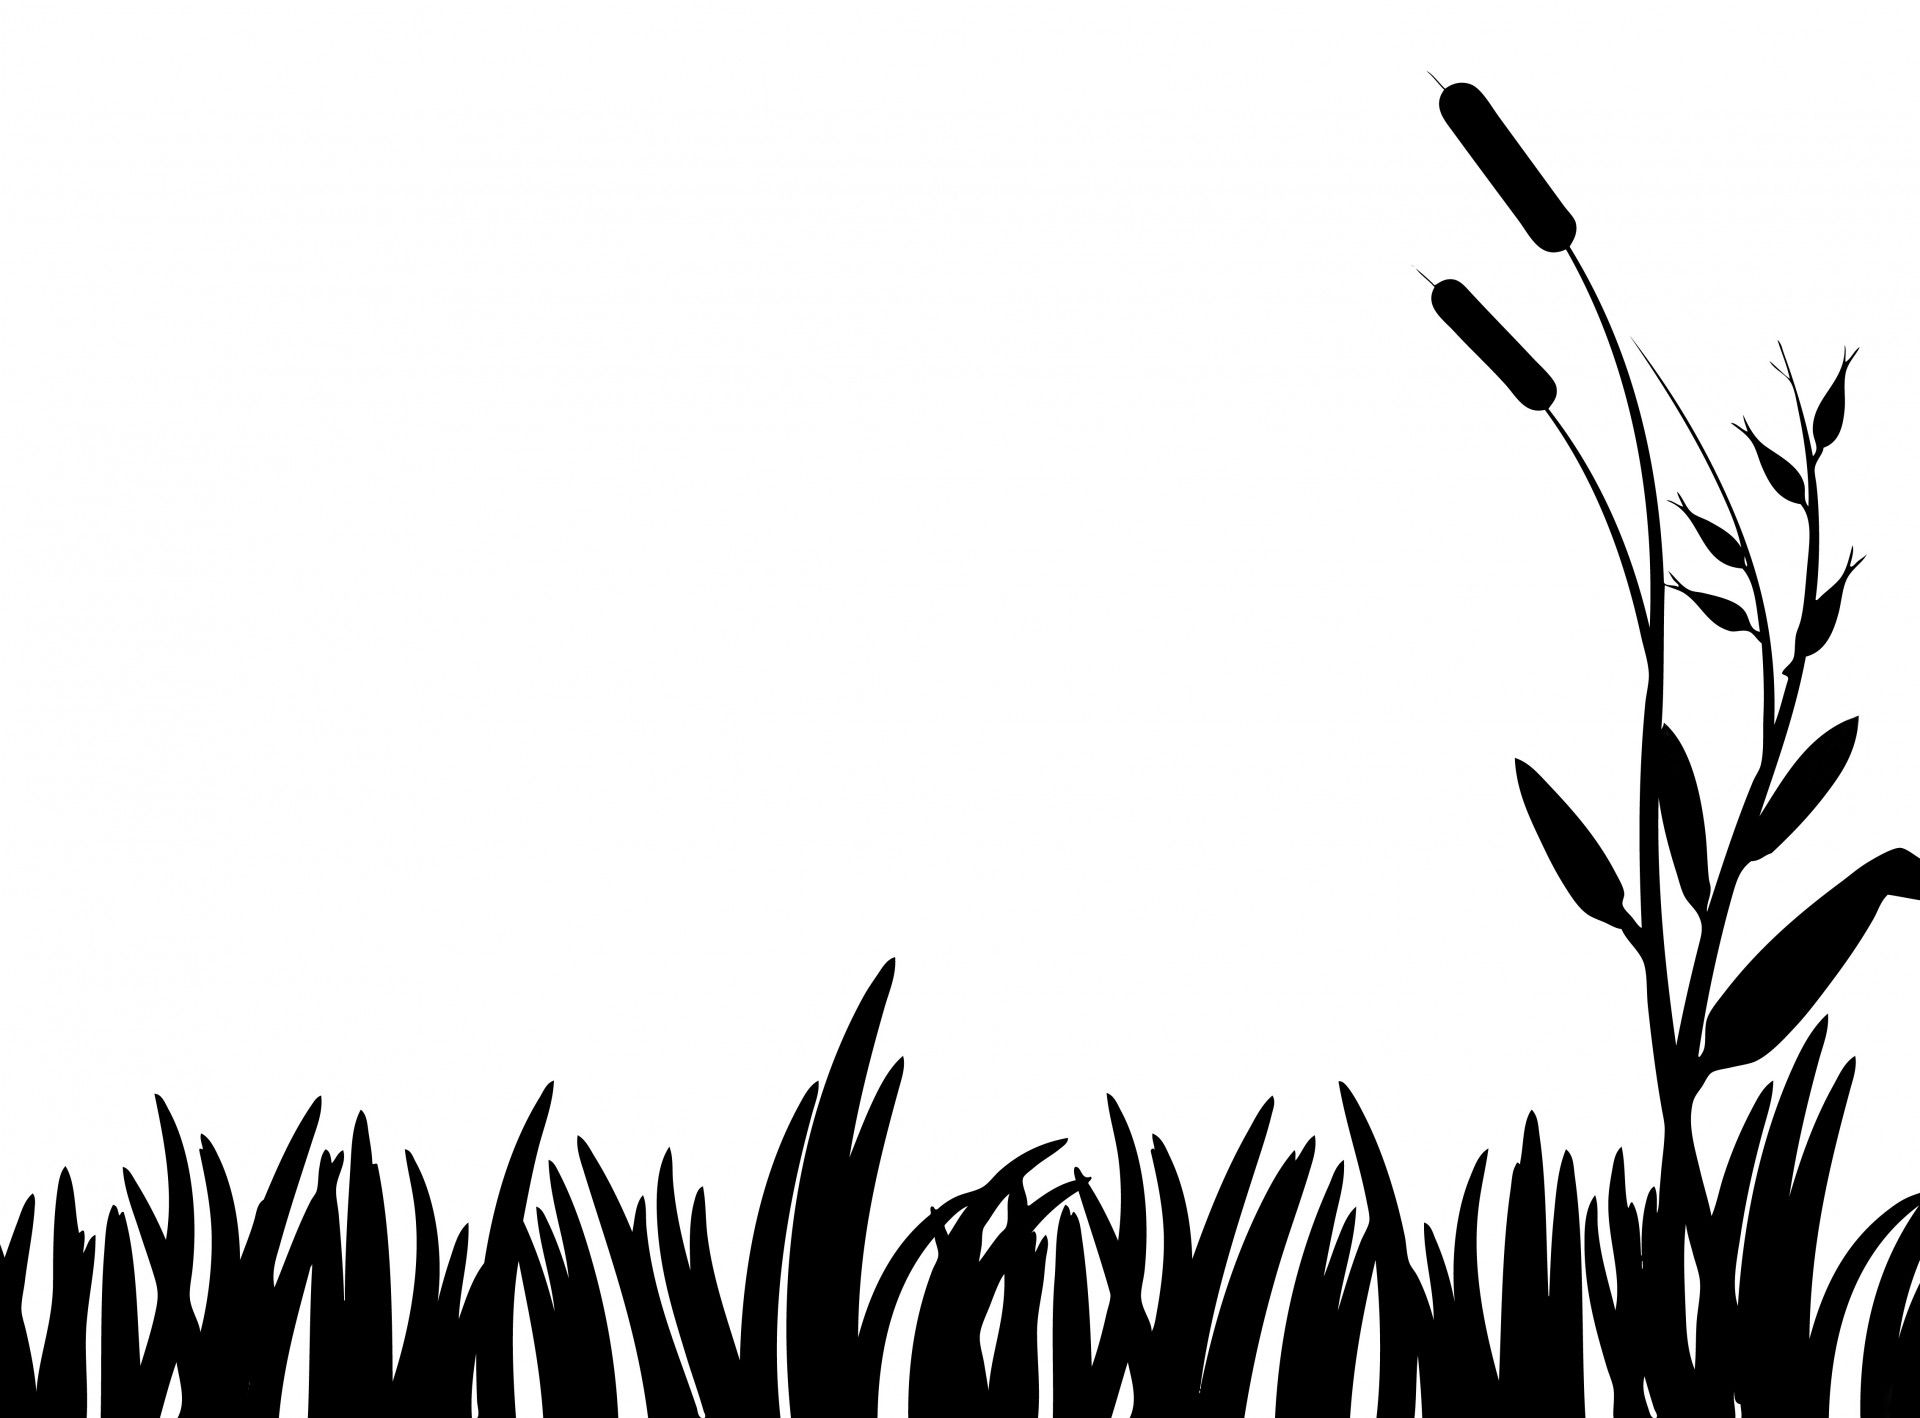 Grass silhouette clipart.